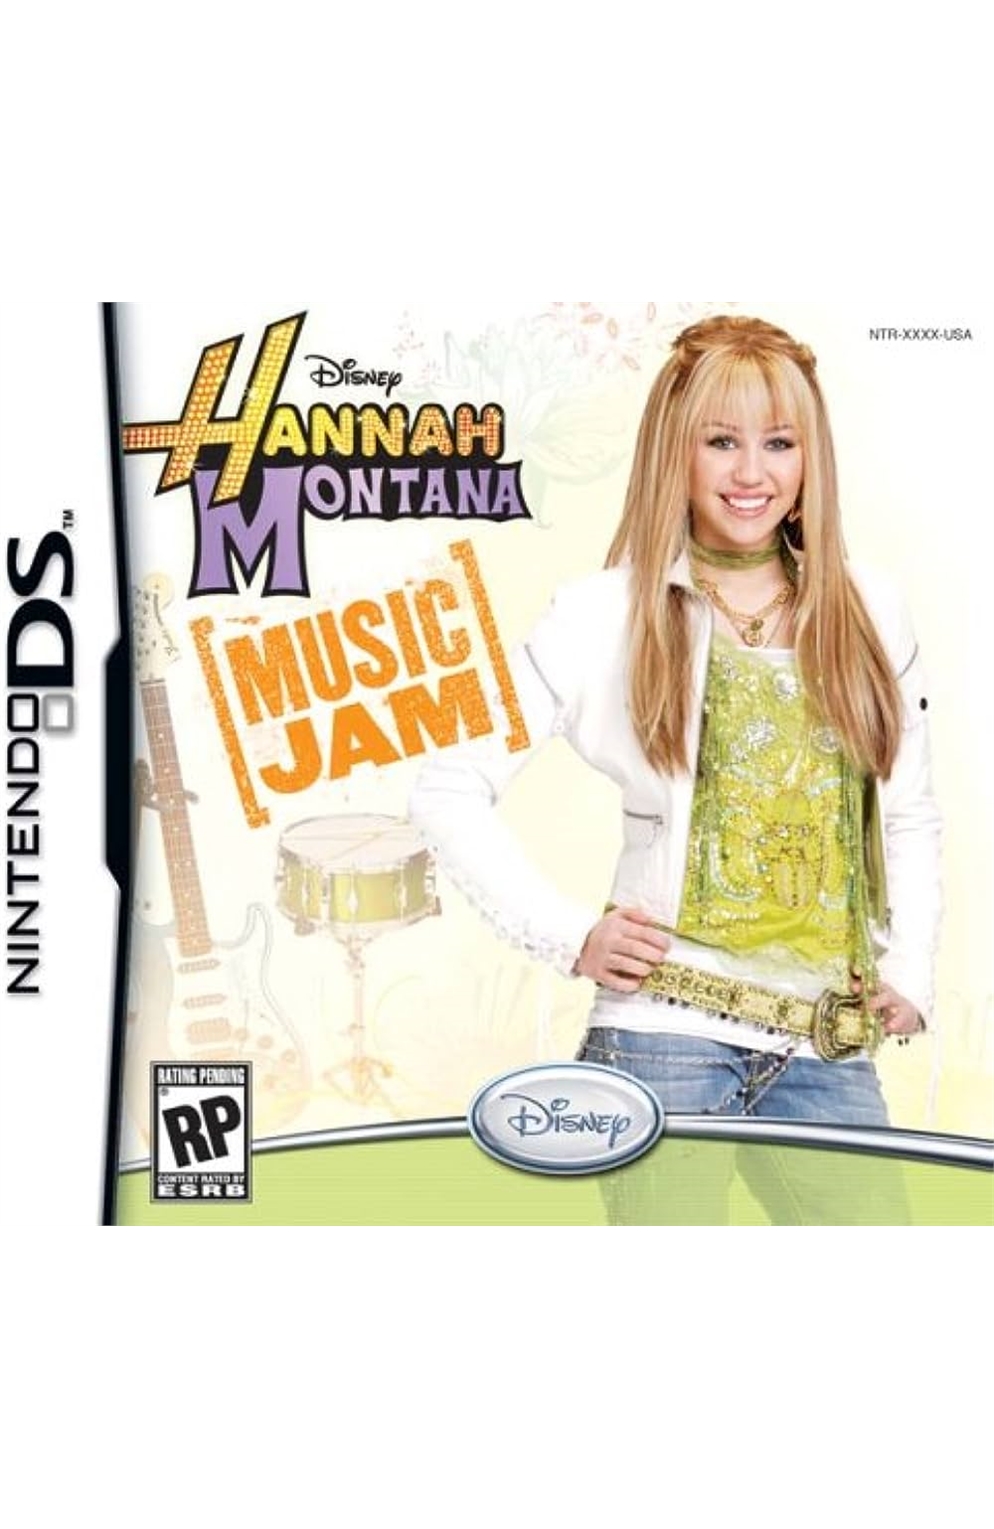 Nintendo Ds Nds Disney Hannah Montana Music Jam